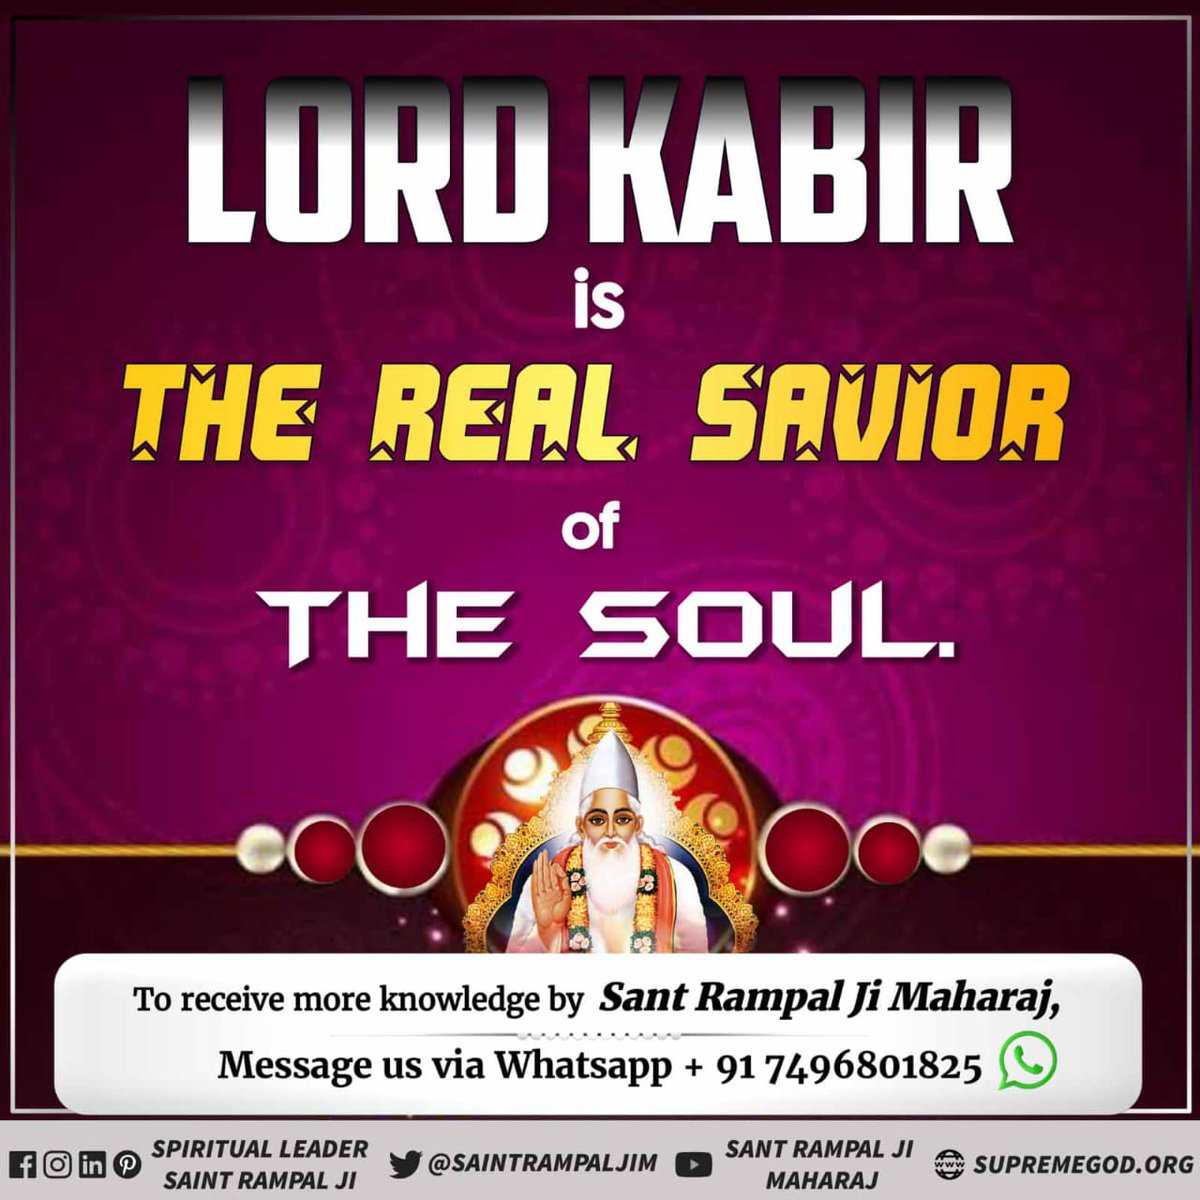 #GodNightMonday 
#अविनाशी_परमात्मा_कबीर
LORD KABIR is THE REAL SAVIOR of THE SOUL.
TO KNOW MORE
WATCH SADHNA TV 7:30 PM(IST)